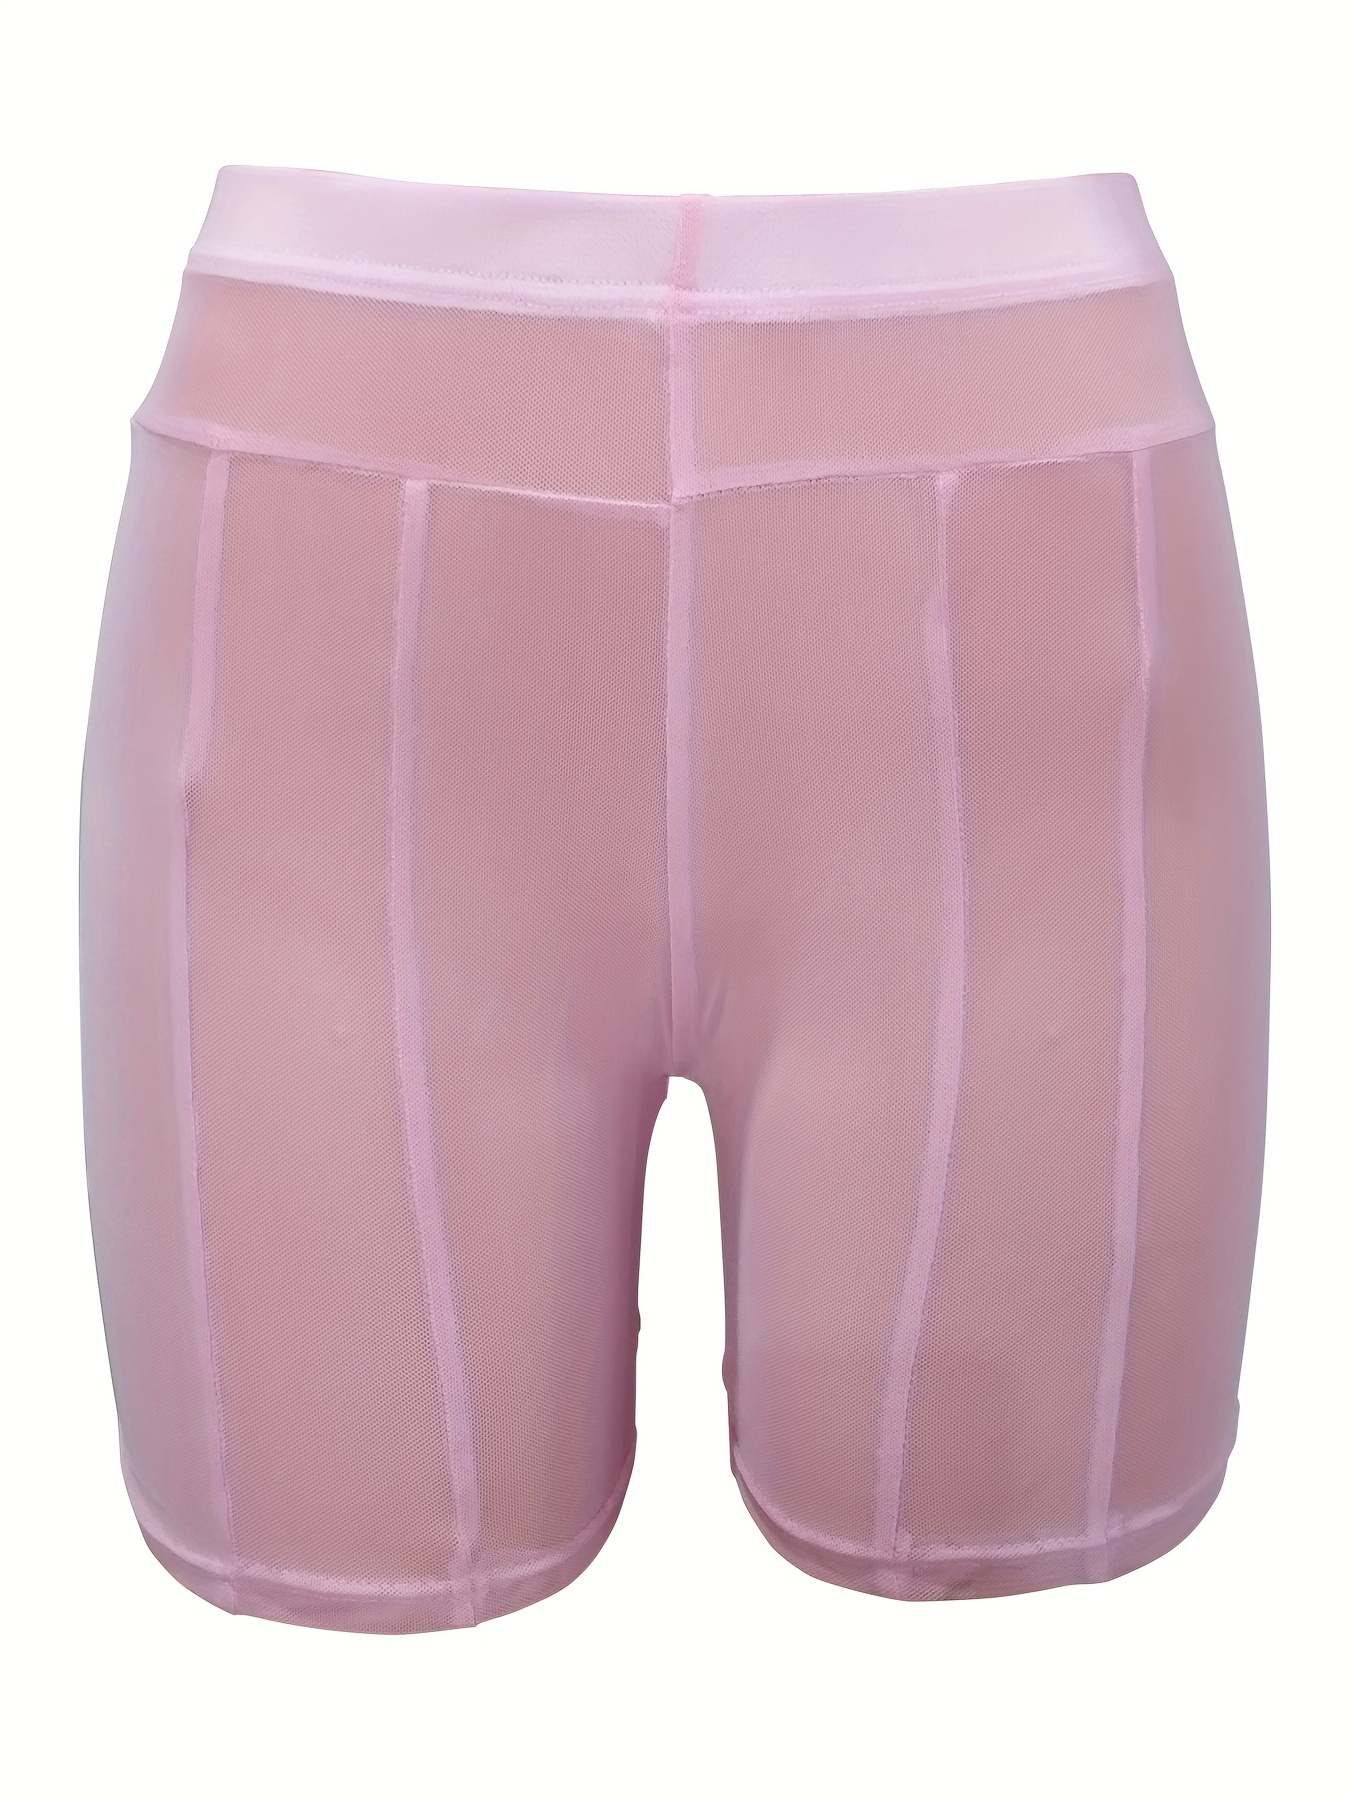 Comprar Pantalones transparentes de malla sexis de verano para